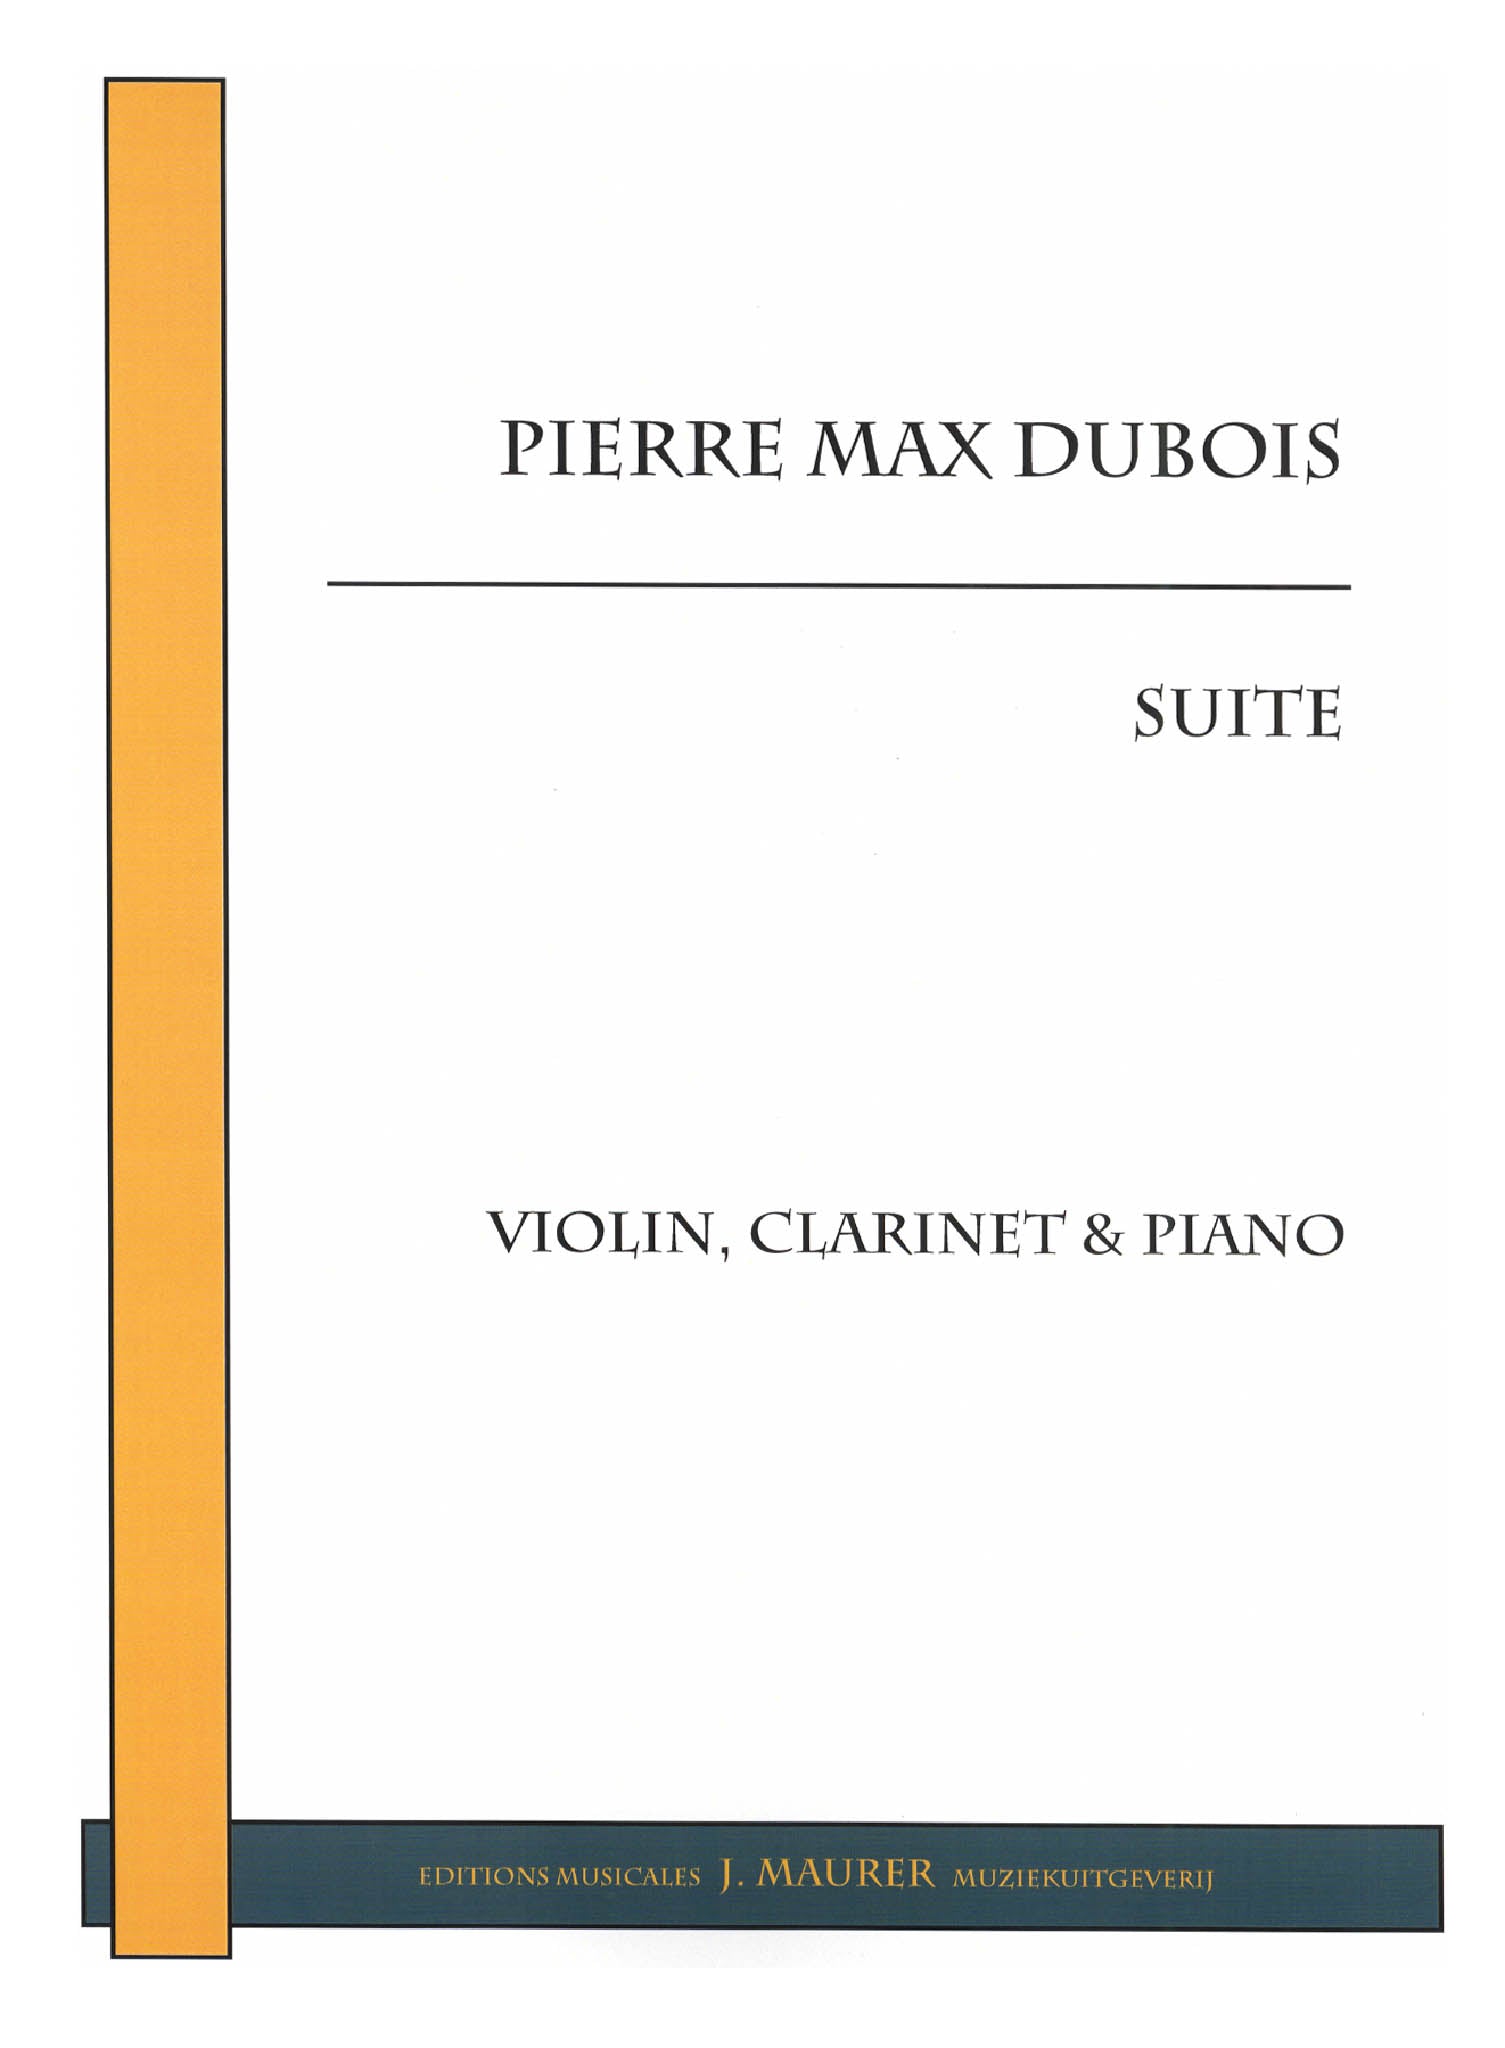 Pierre Max Dubois Suite for clarinet, violin, & piano cover